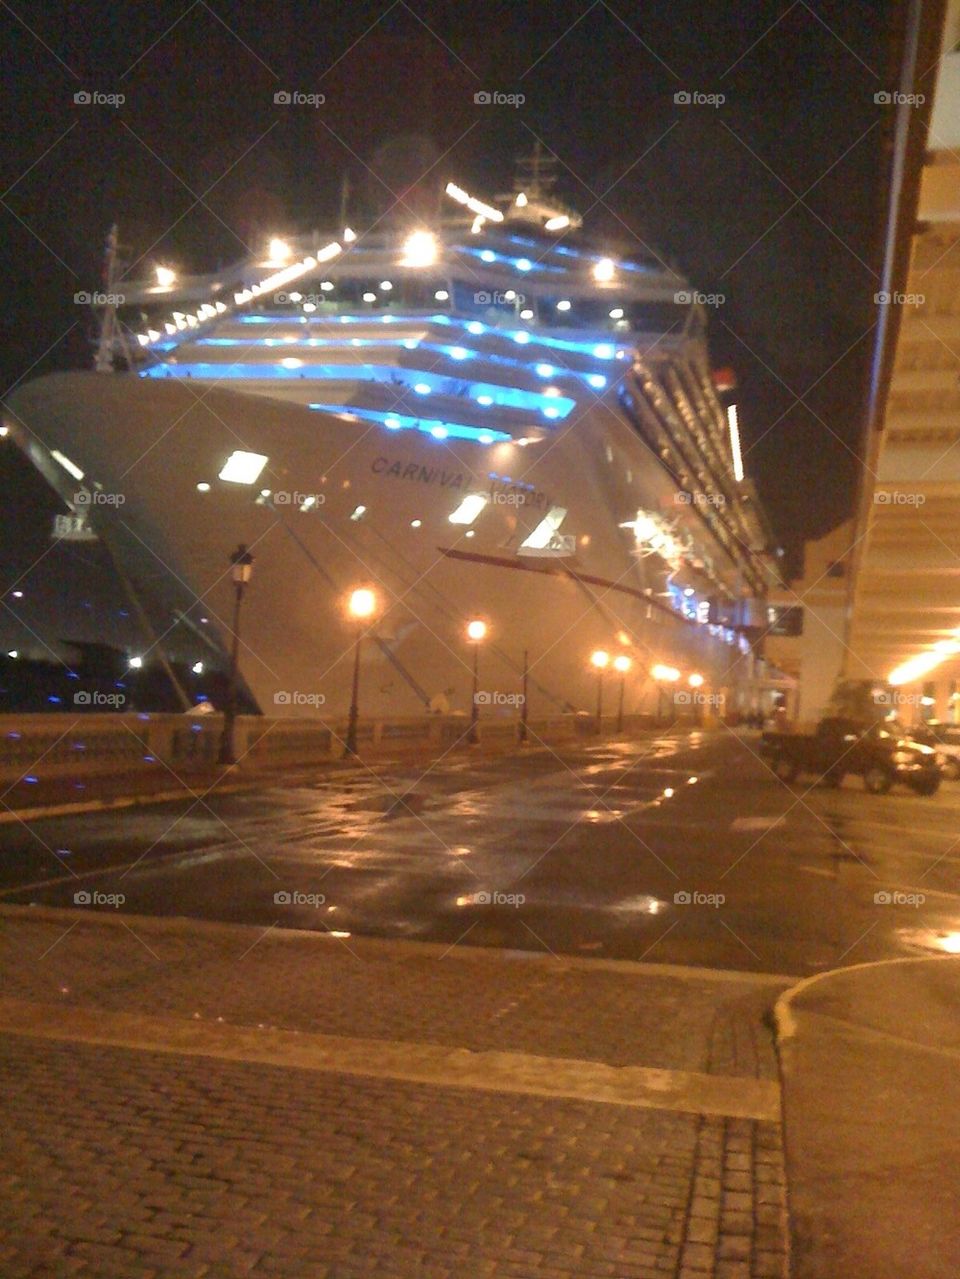 Cruise 2010